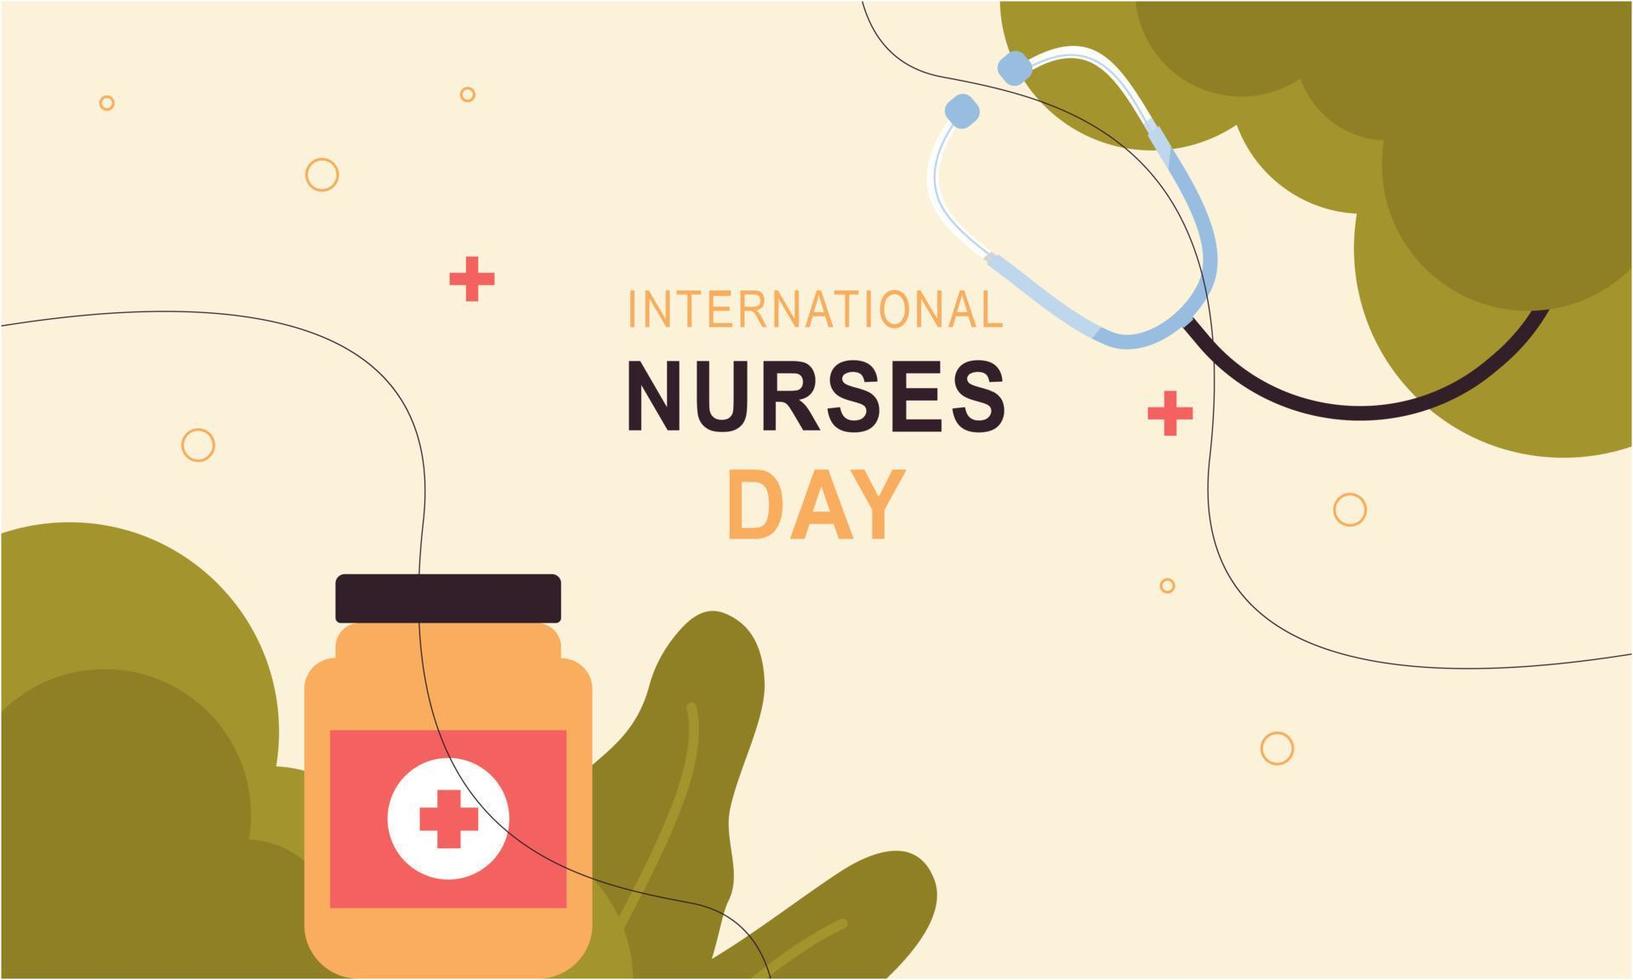 International nurses day background vector